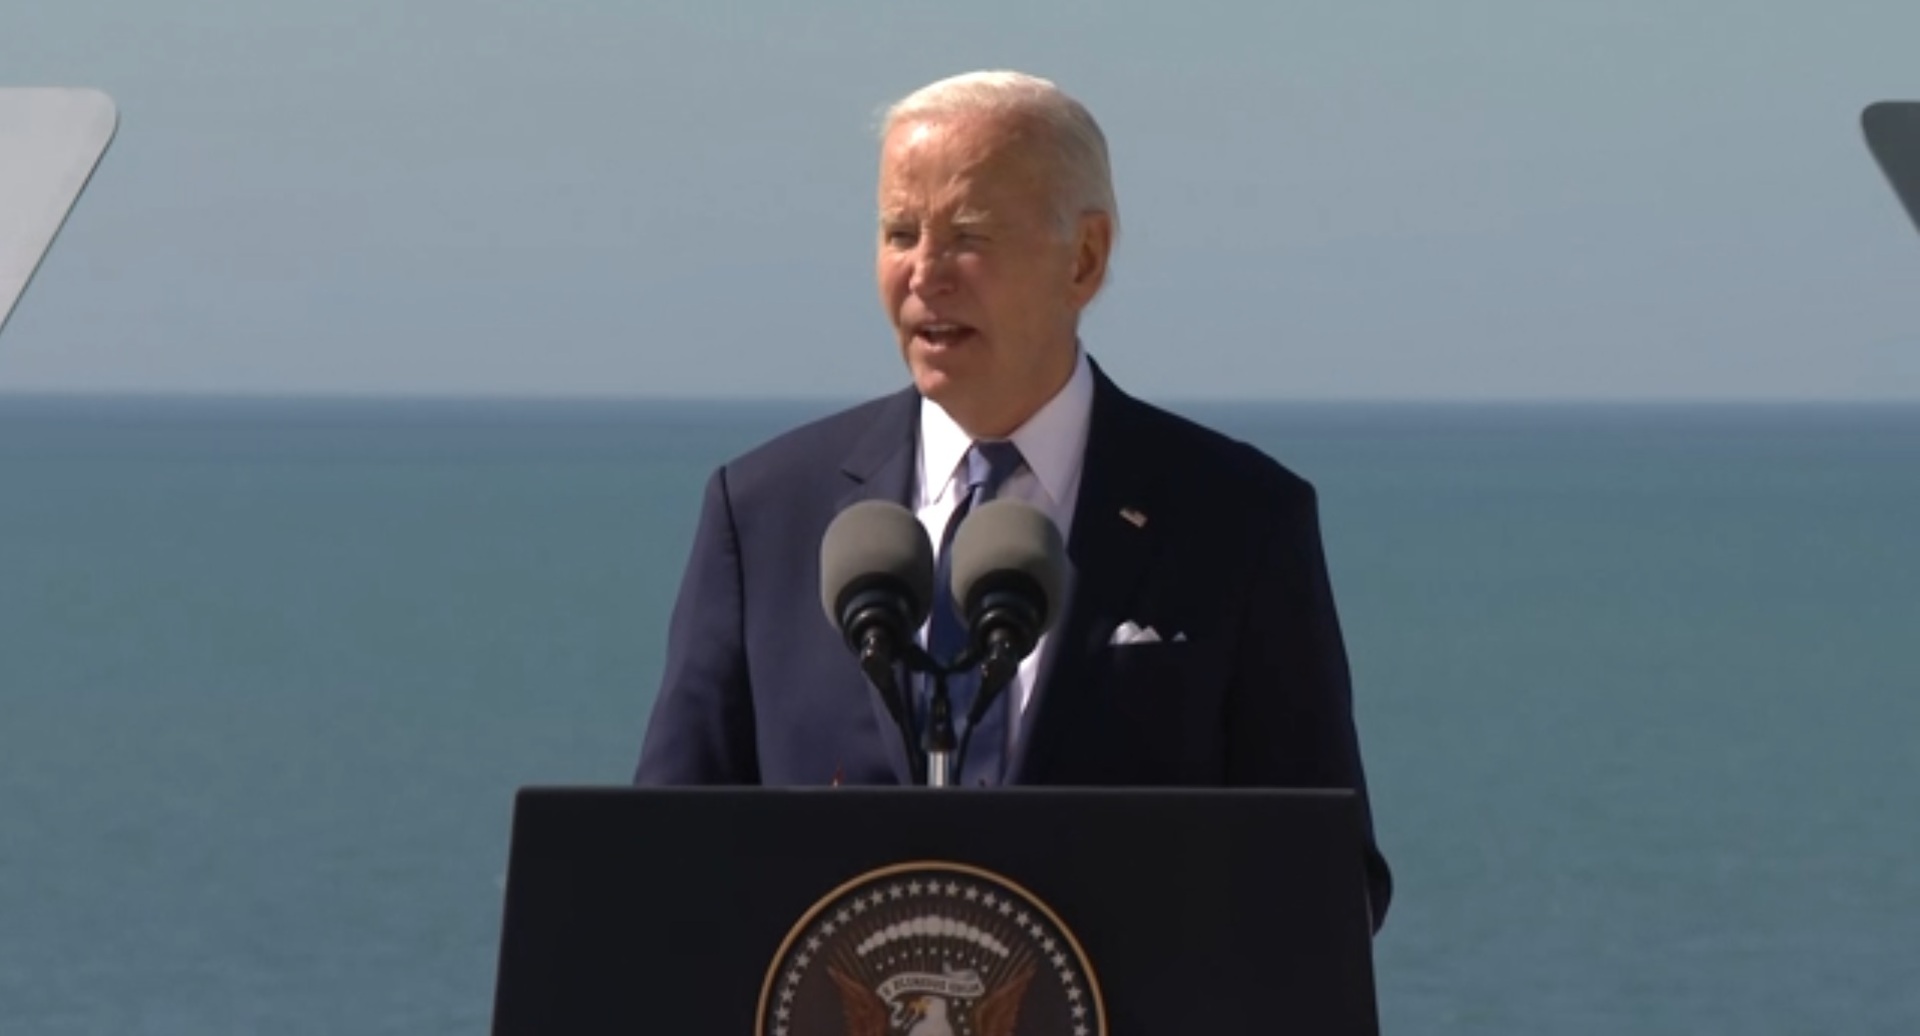 Biden speaks on the power of democracy in Normandy